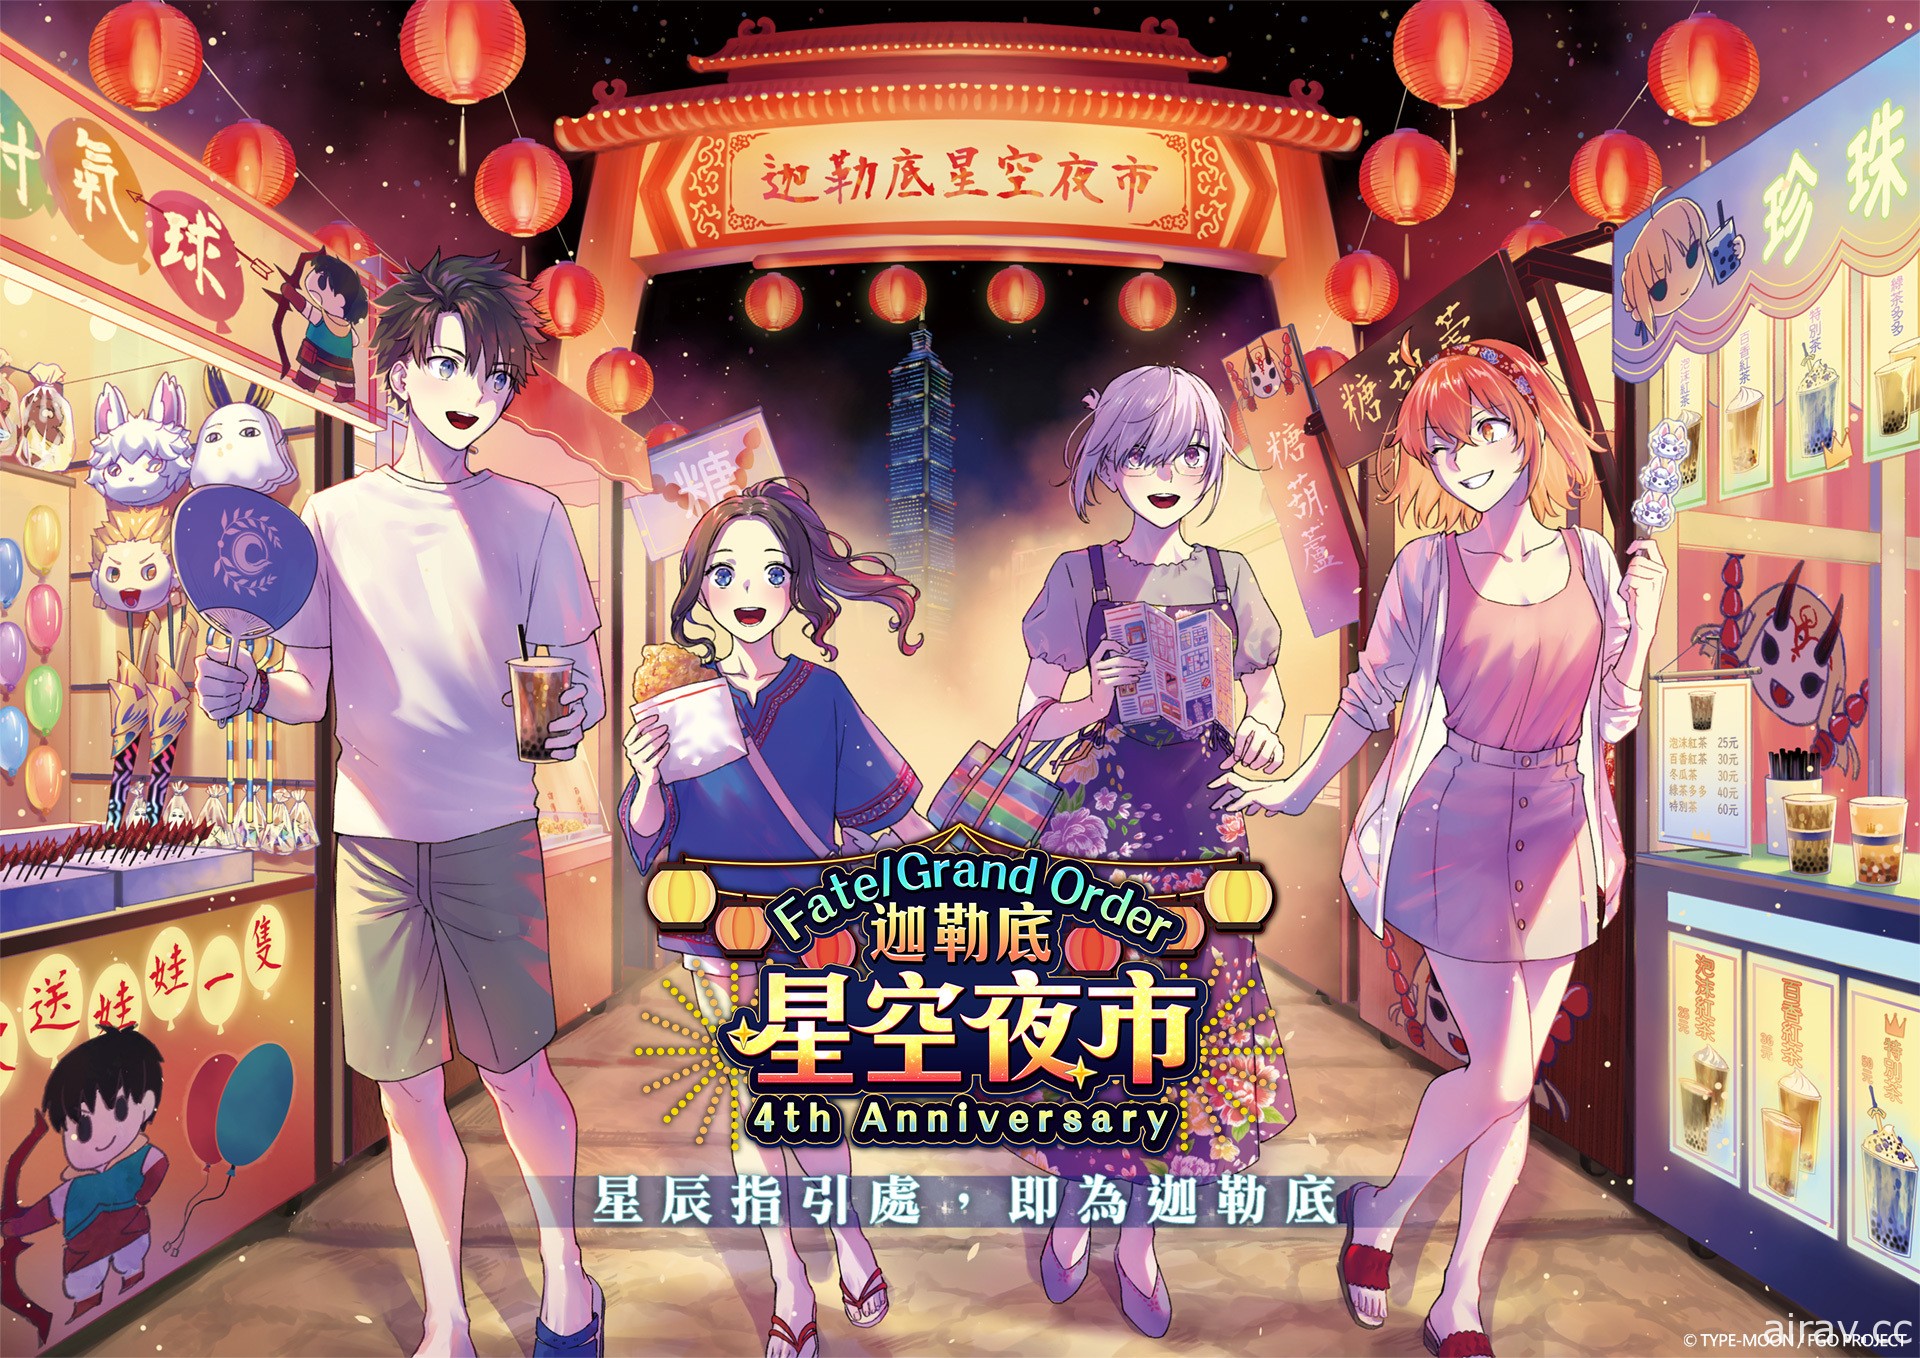 《Fate/Grand Order》繁中版四周年庆典 5 月登场 携手台湾夜市推出一系列活动